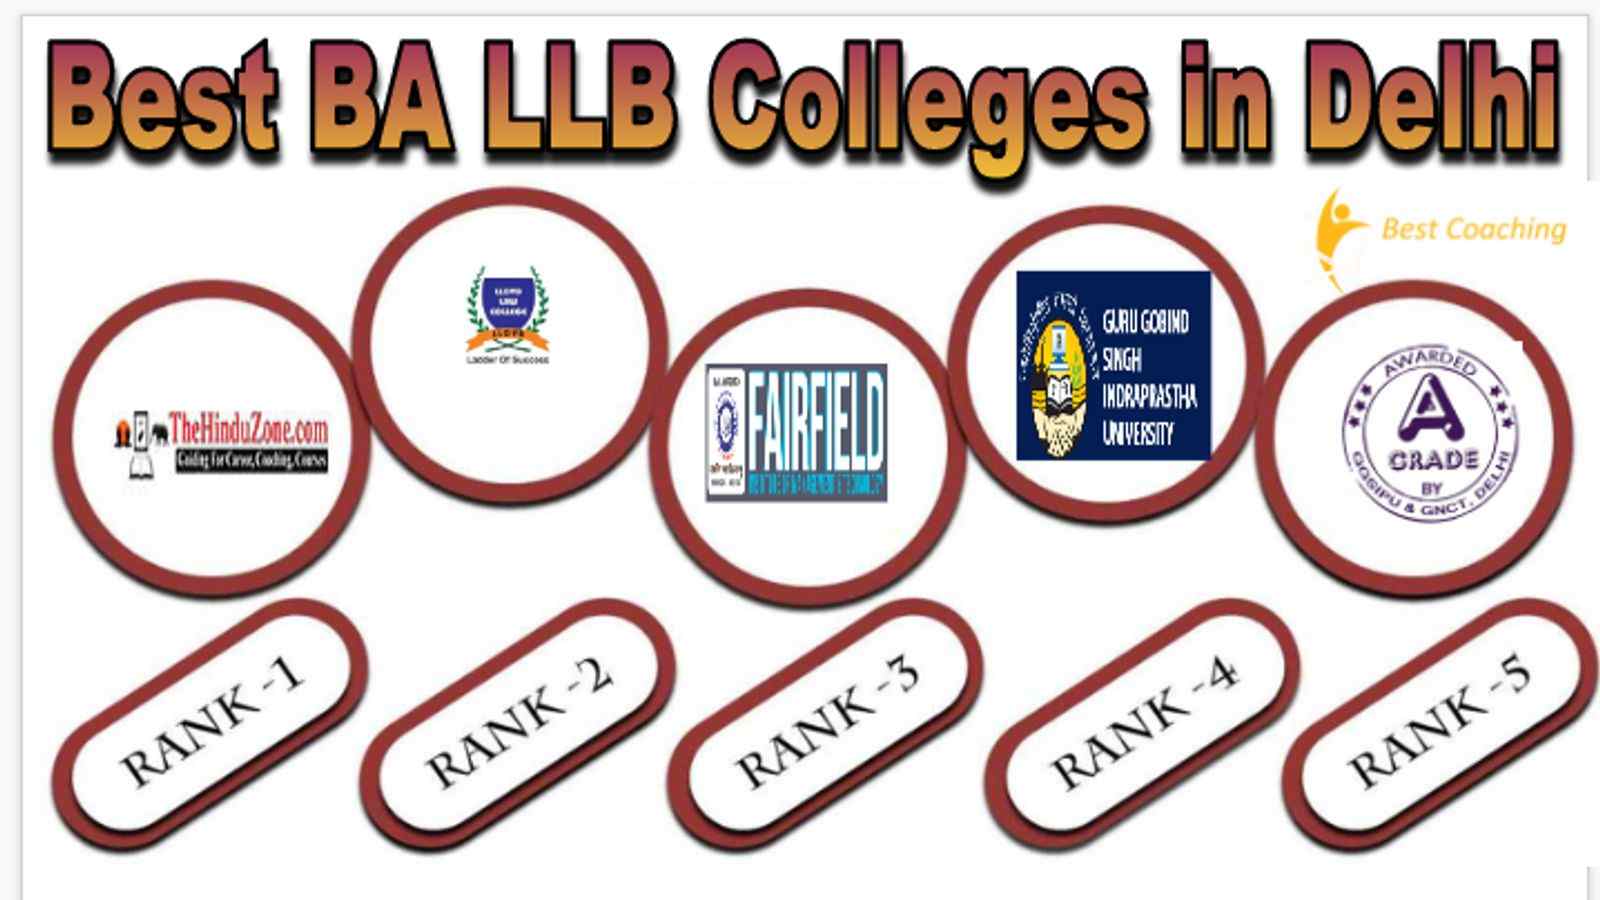 Best BA LLB Colleges in Delhi